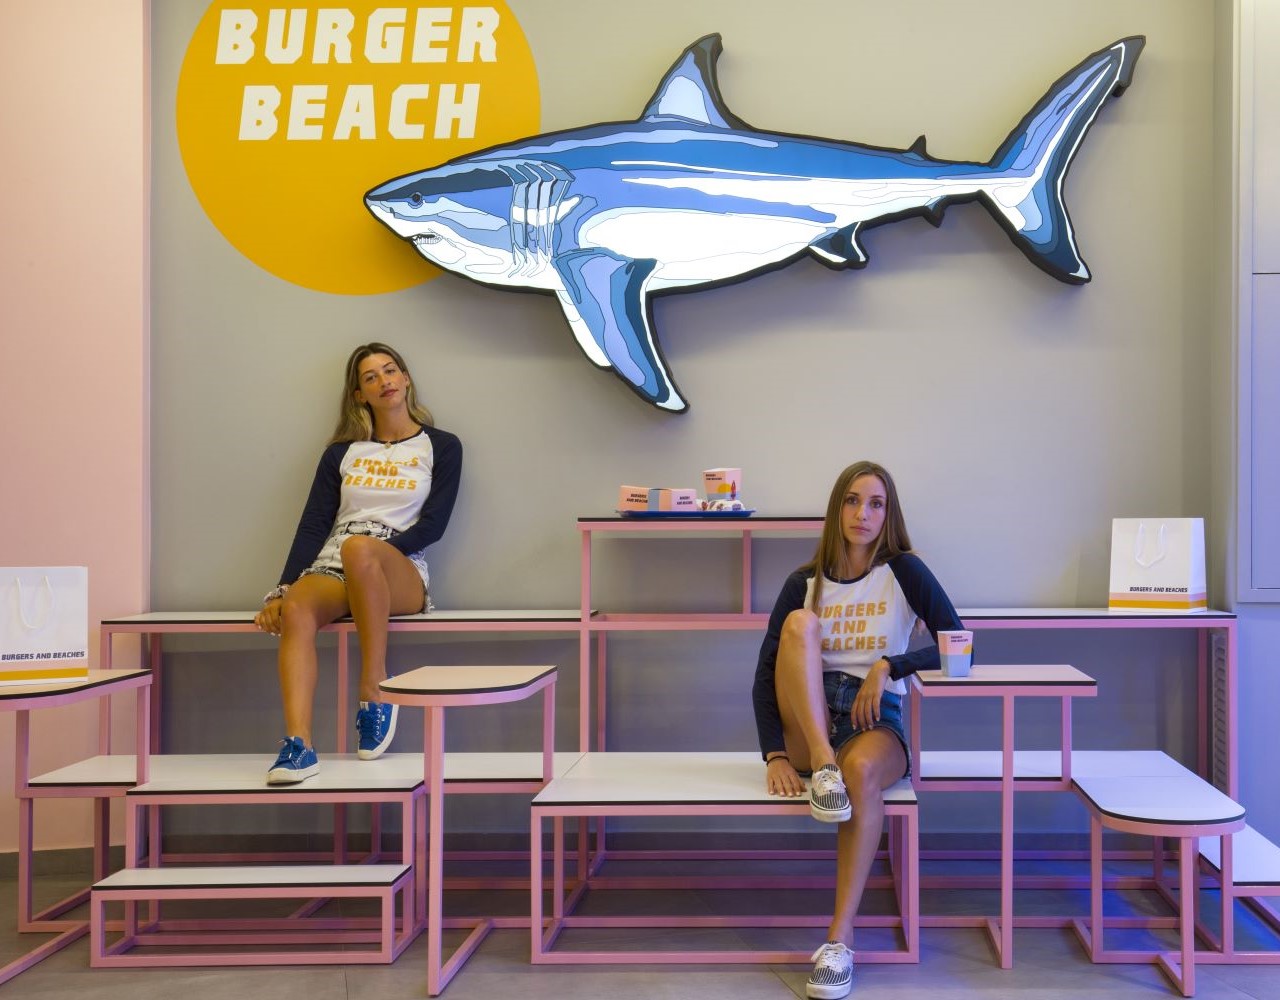 Burgers and Beaches, η νέα άφιξη της Γλυφάδας μας βάζει σε καλοκαιρινό mood